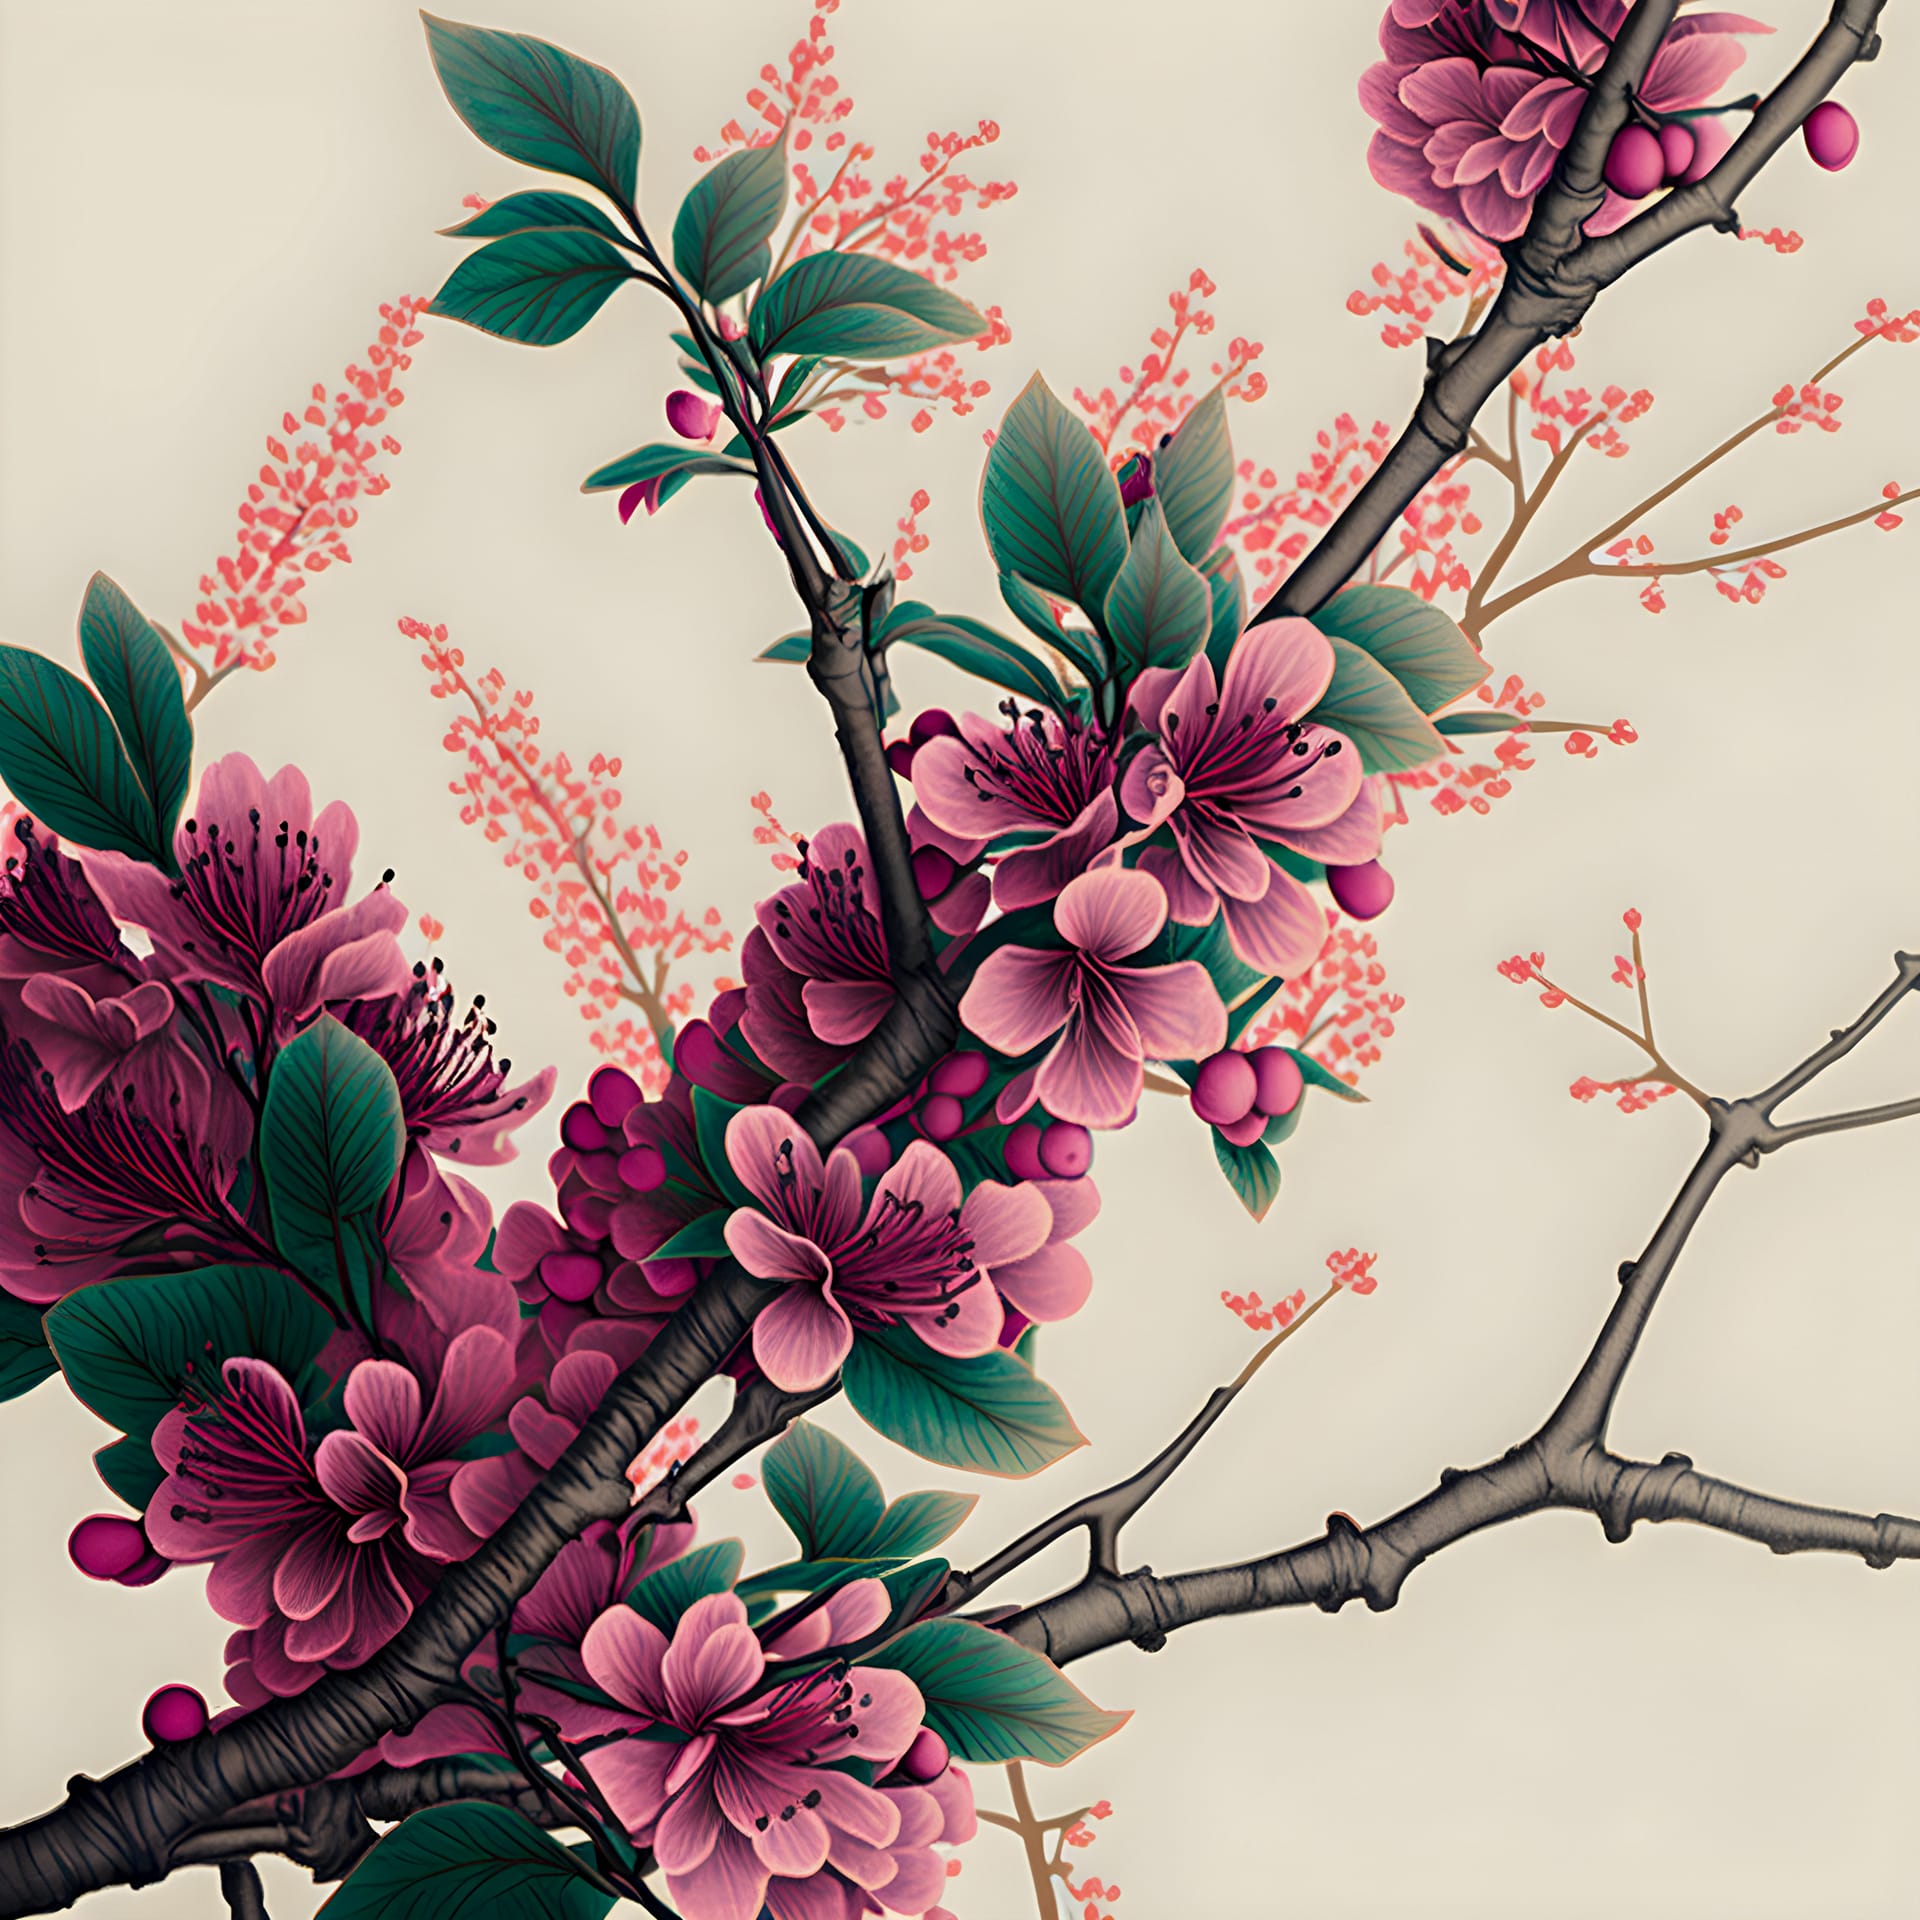 Cherry blossom tree hand drawn illustration nice image